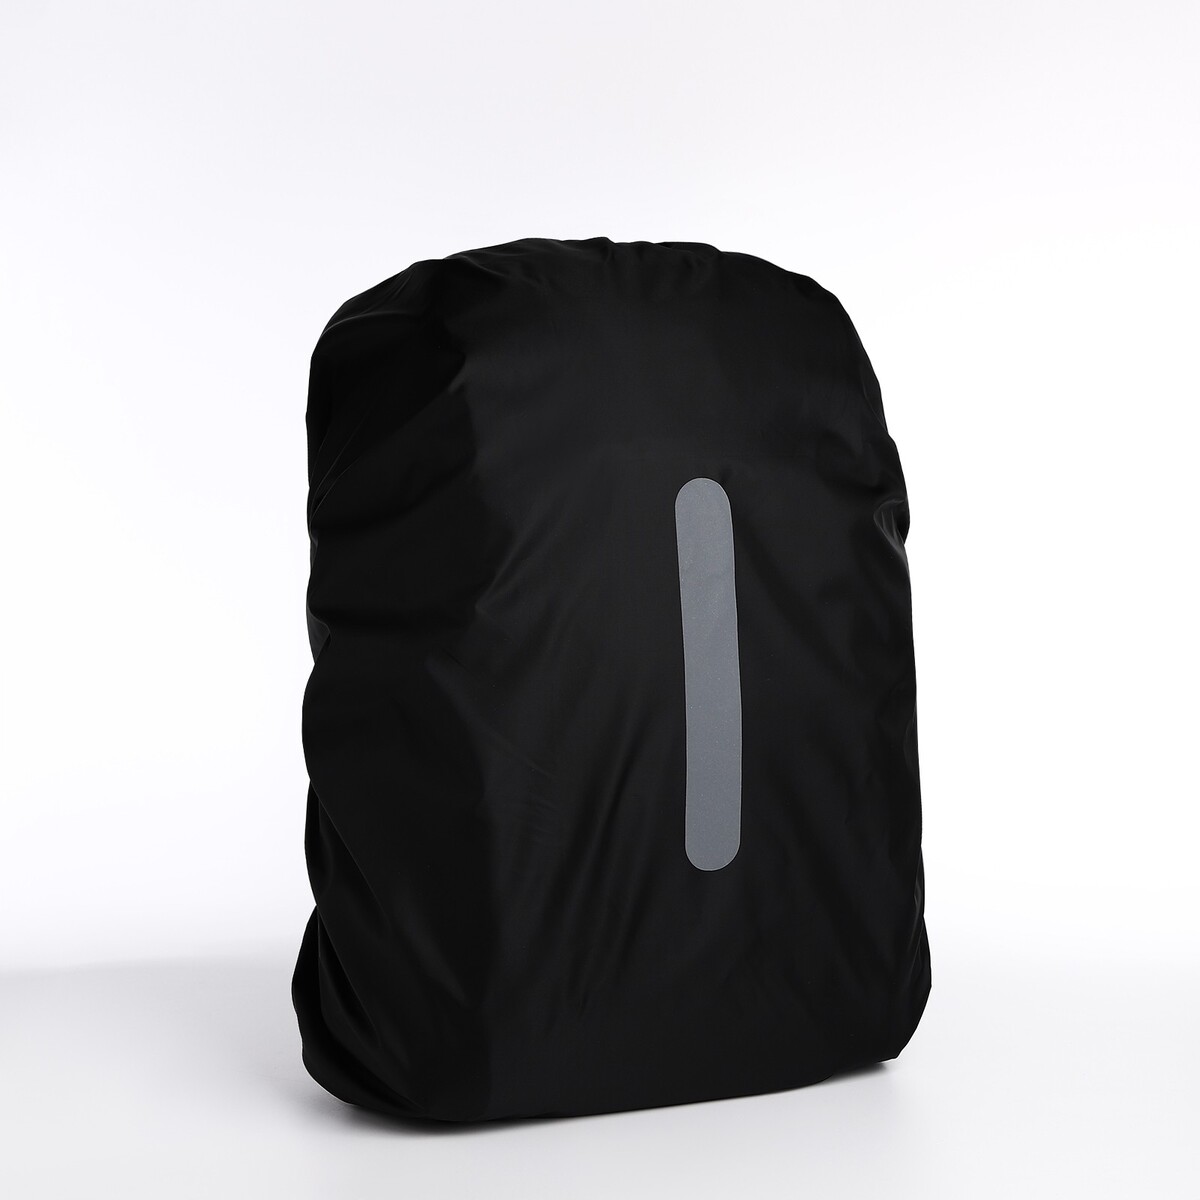 Чехол на рюкзак водоотталкивающий, объем 60 л, цвет черный чехол на рюкзак 60 л